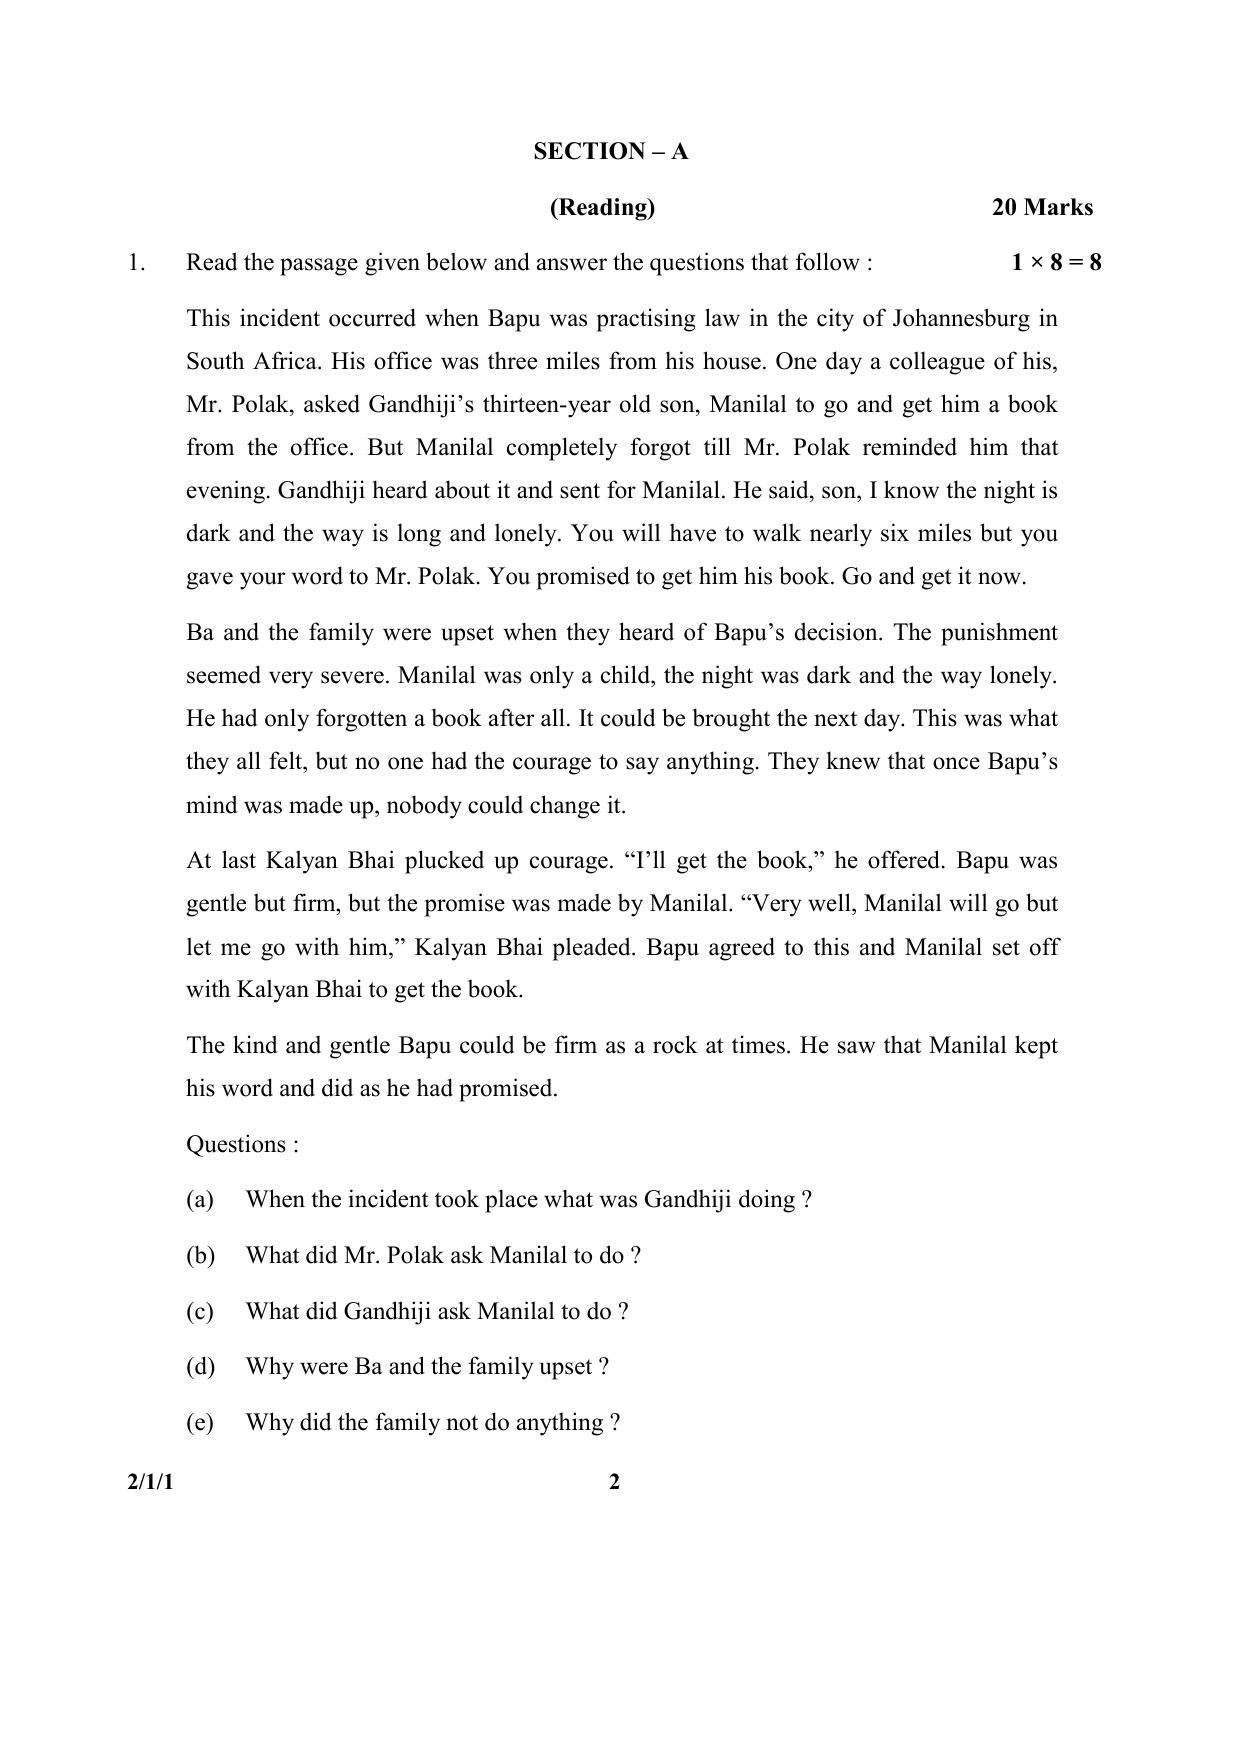 CBSE Class 10 2-1-1 (English Lan. & Lit.) 2017-comptt Question Paper - Page 2